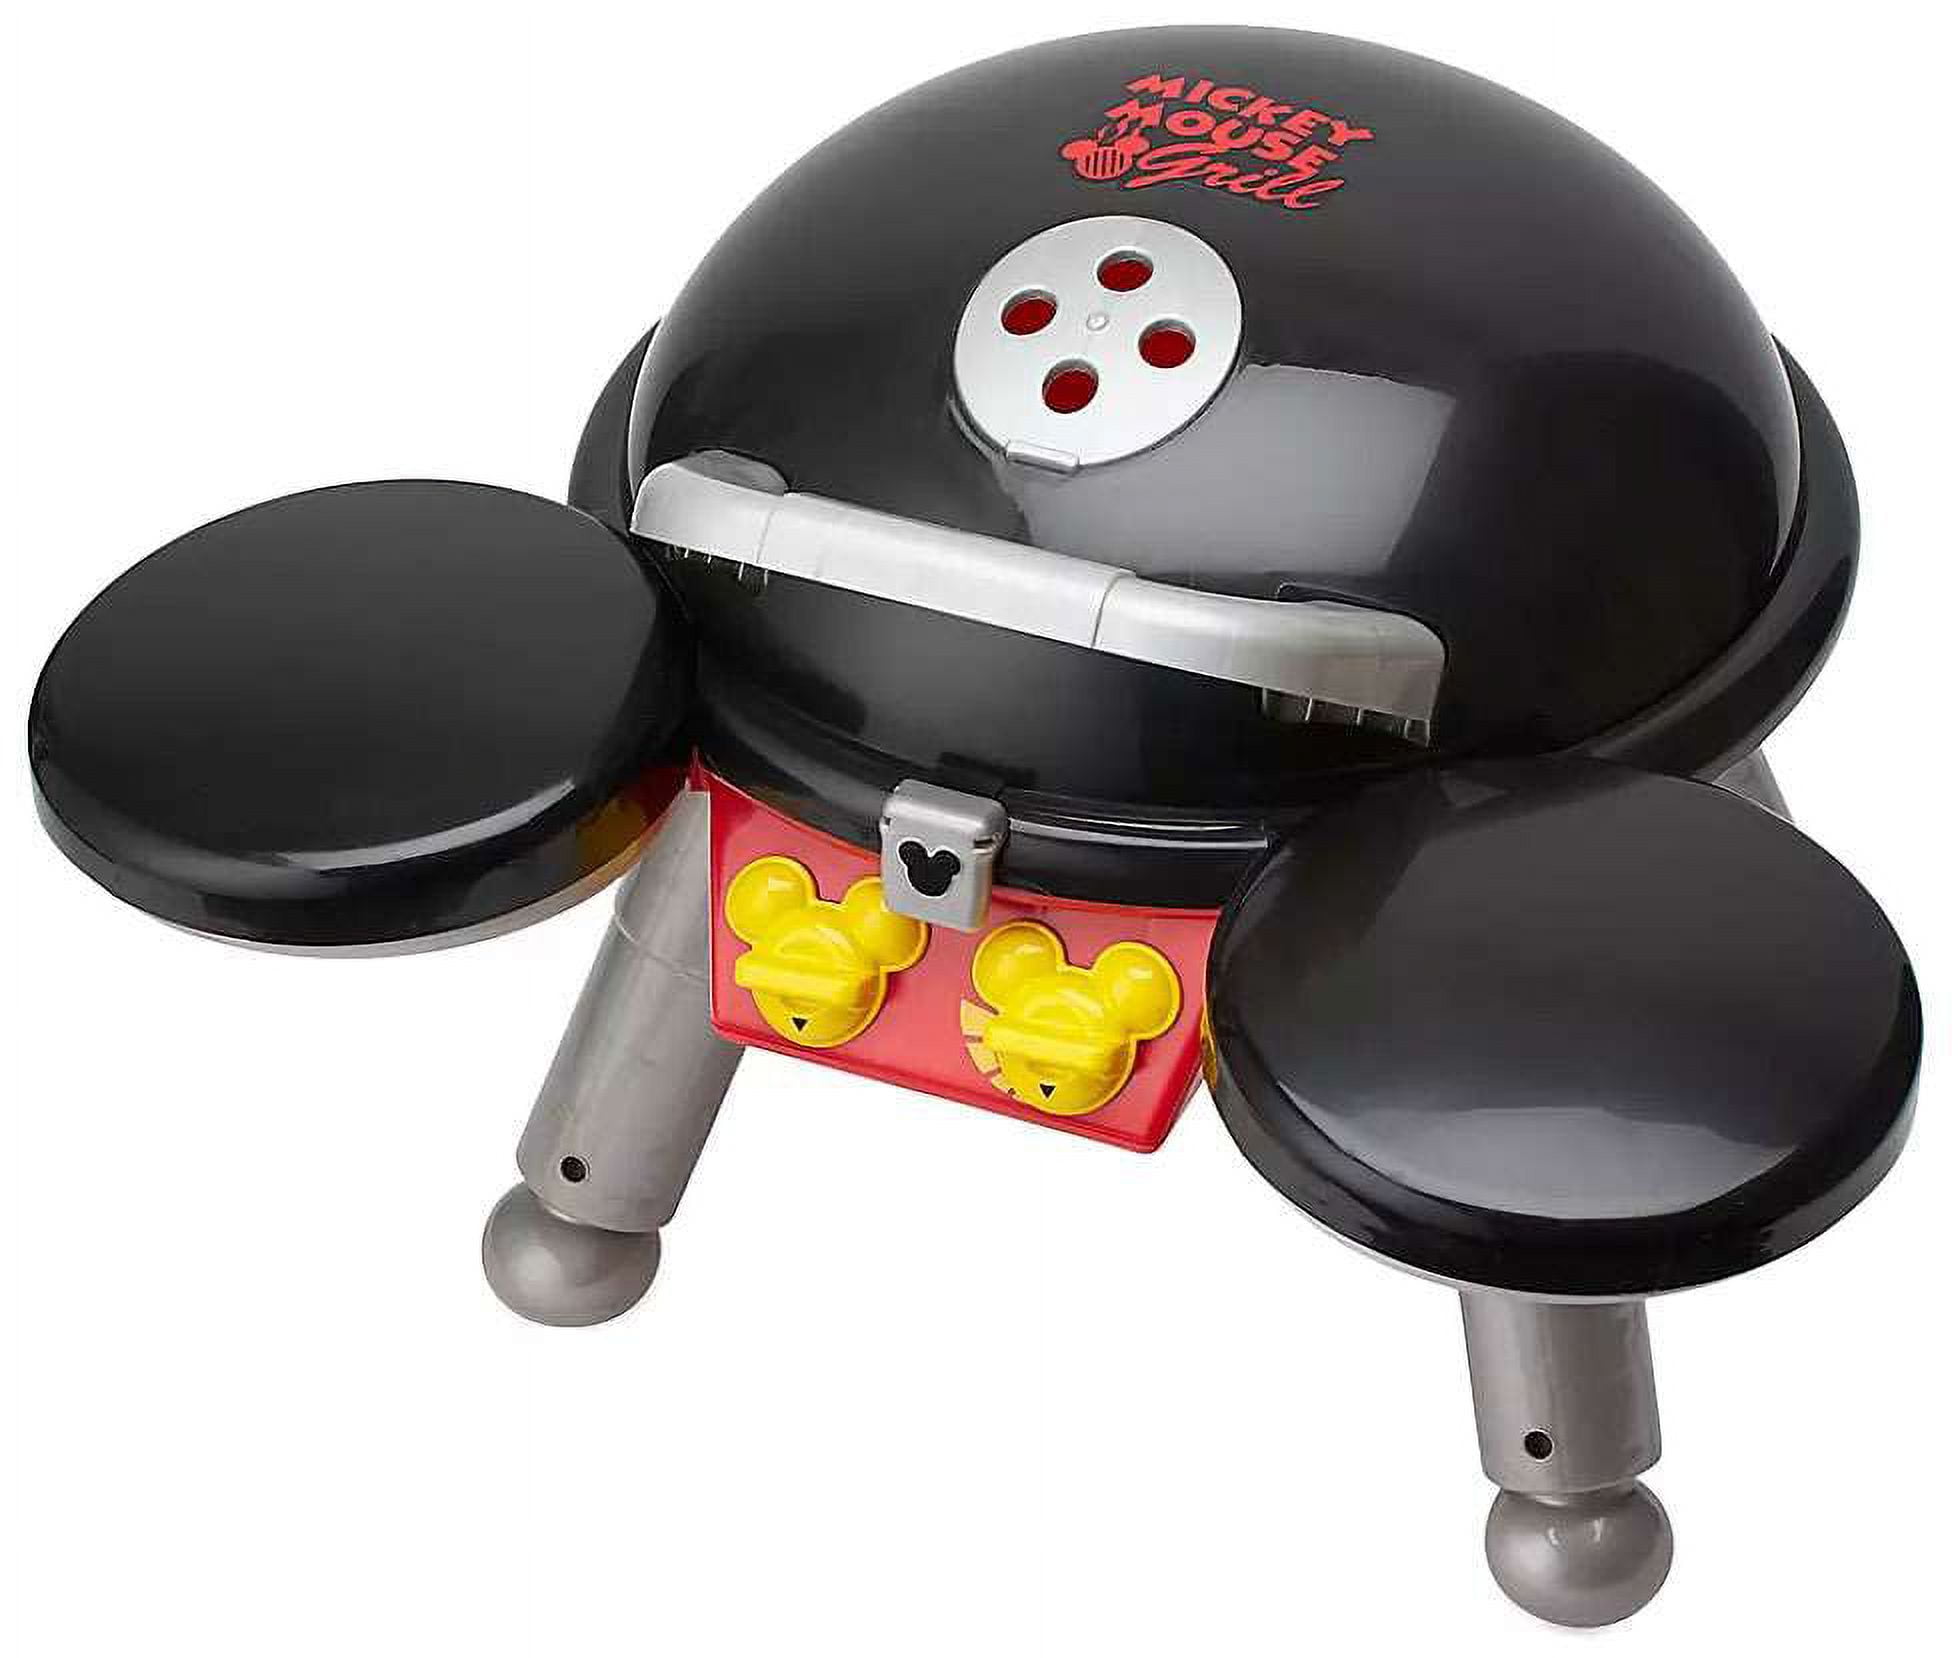  Black+Decker Jr. Barbecue Grill : Toys & Games